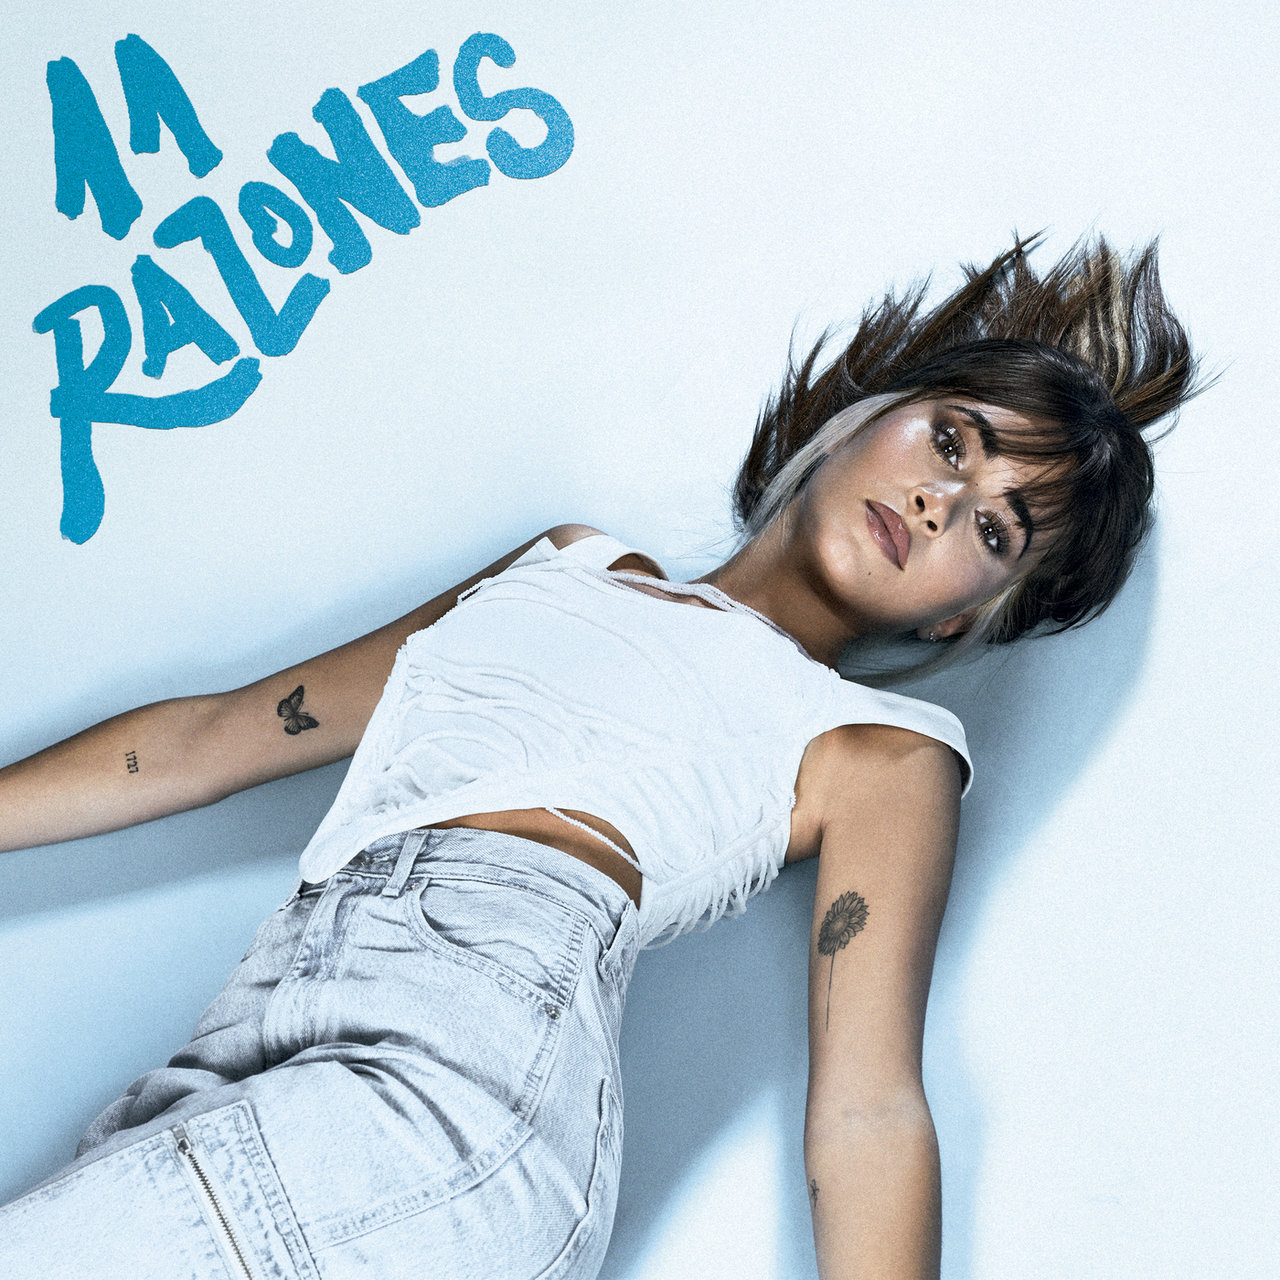 Aitana — 11 RAZONES cover artwork